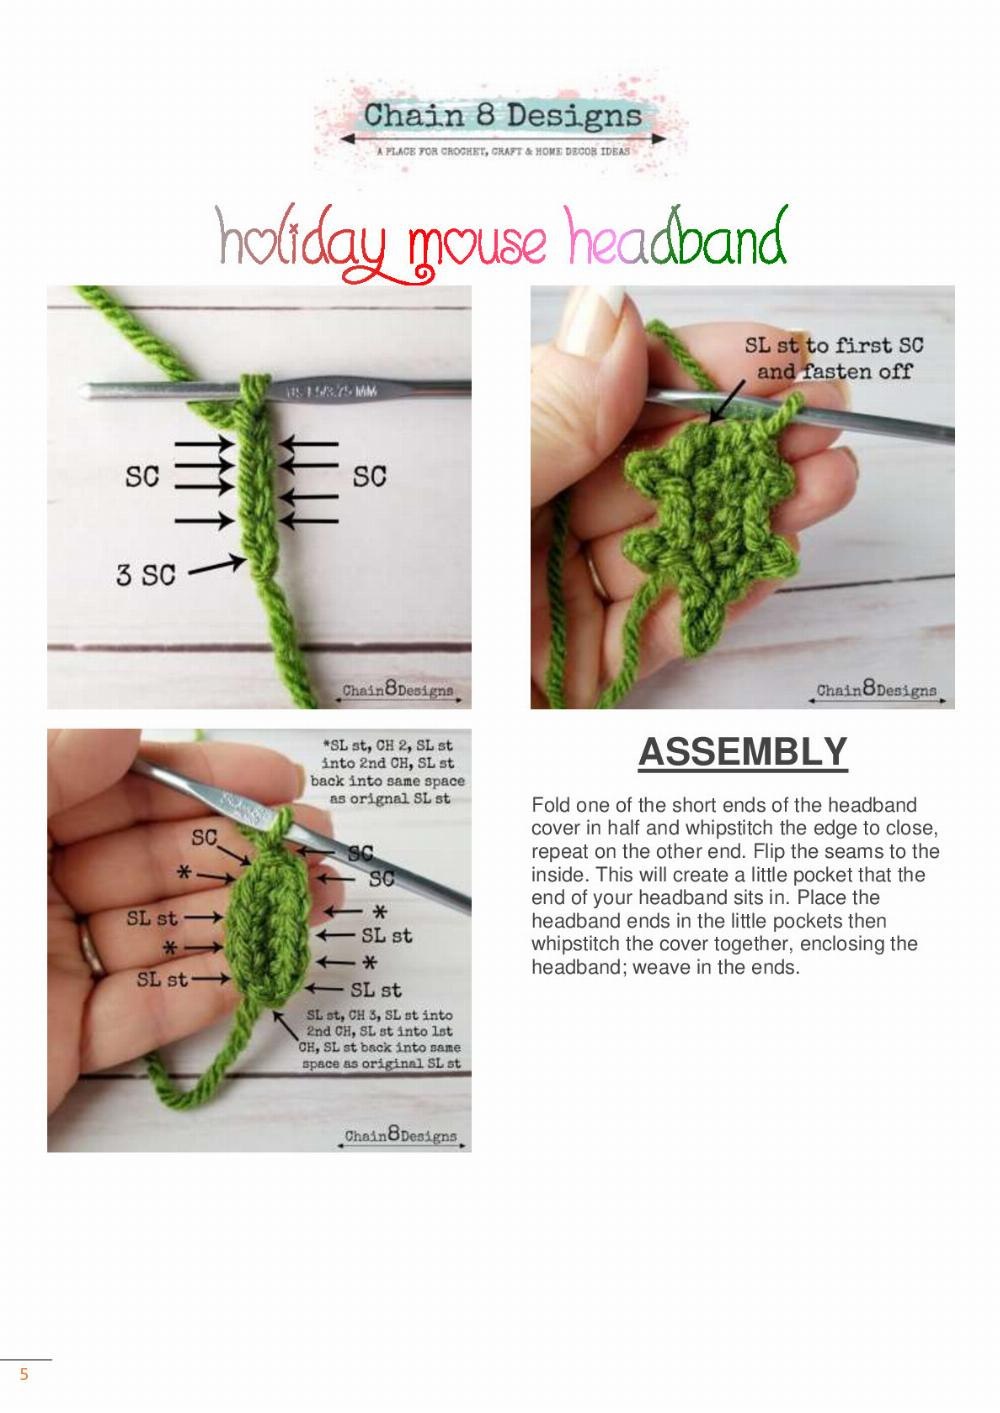 chain holiday mouse headband crochet pattern